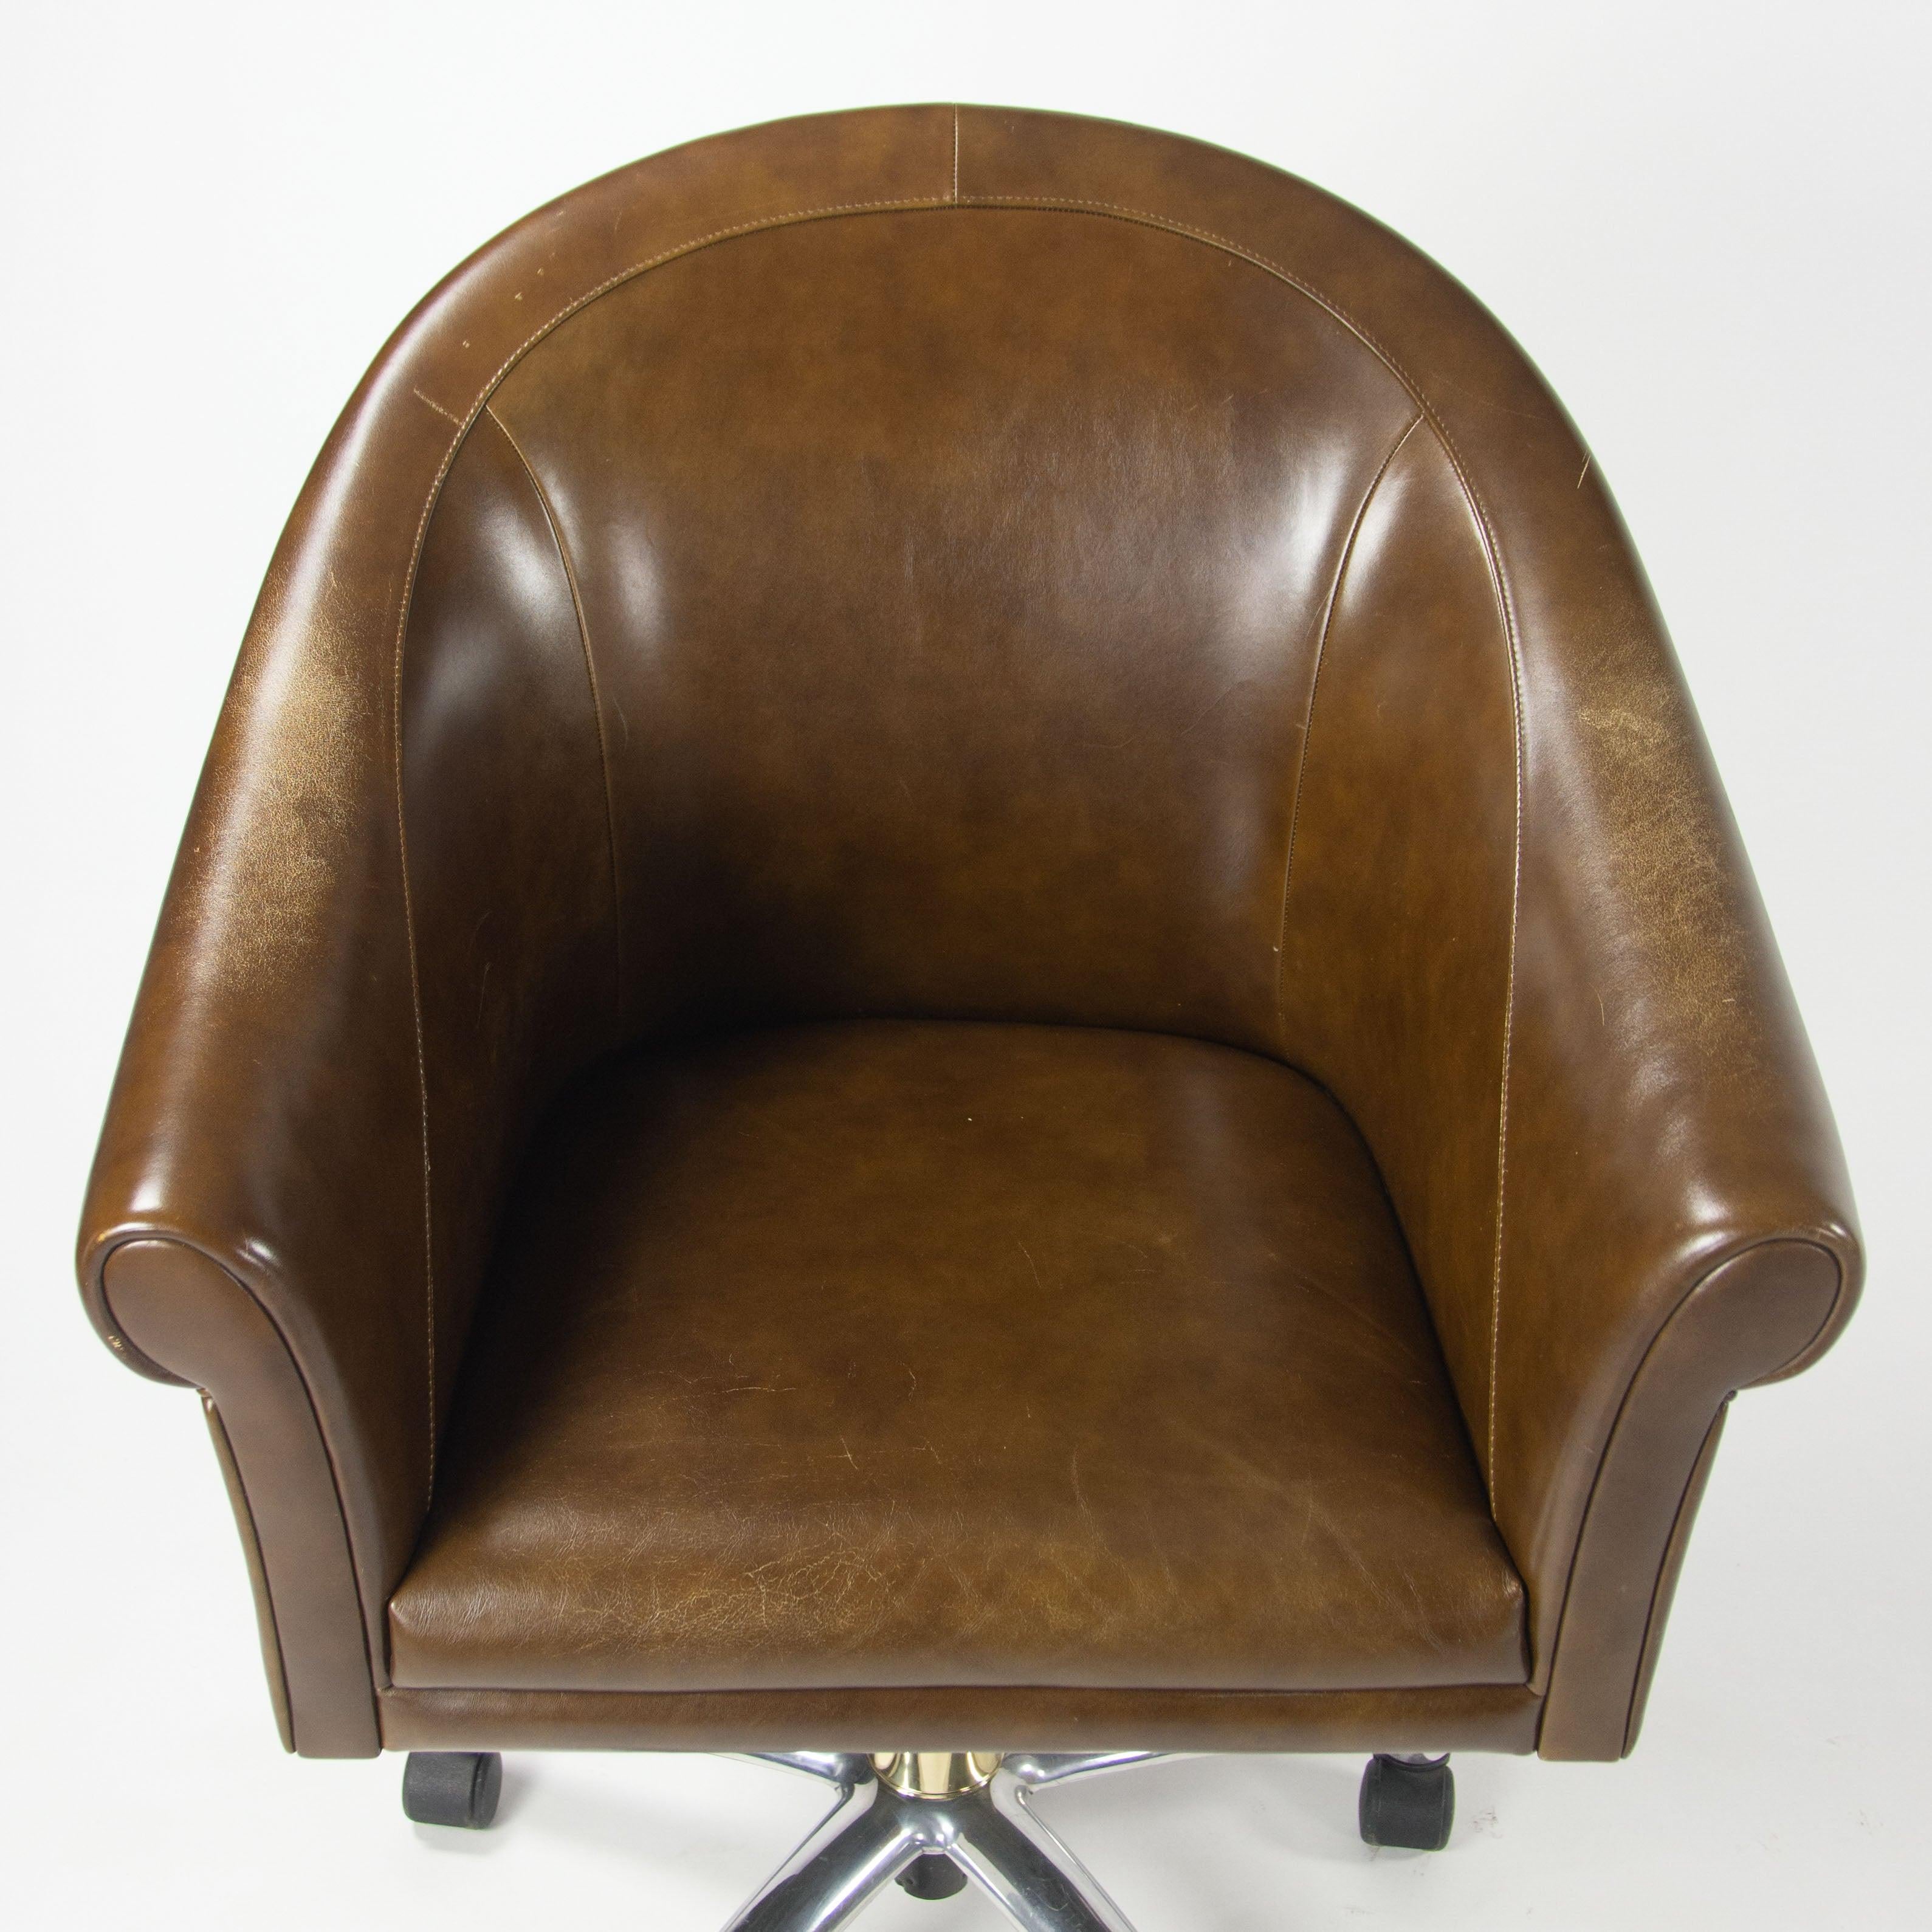 Poltrona Frau Brown Leather Luca Scacchetti Sinan Office Desk Chair For Sale 3